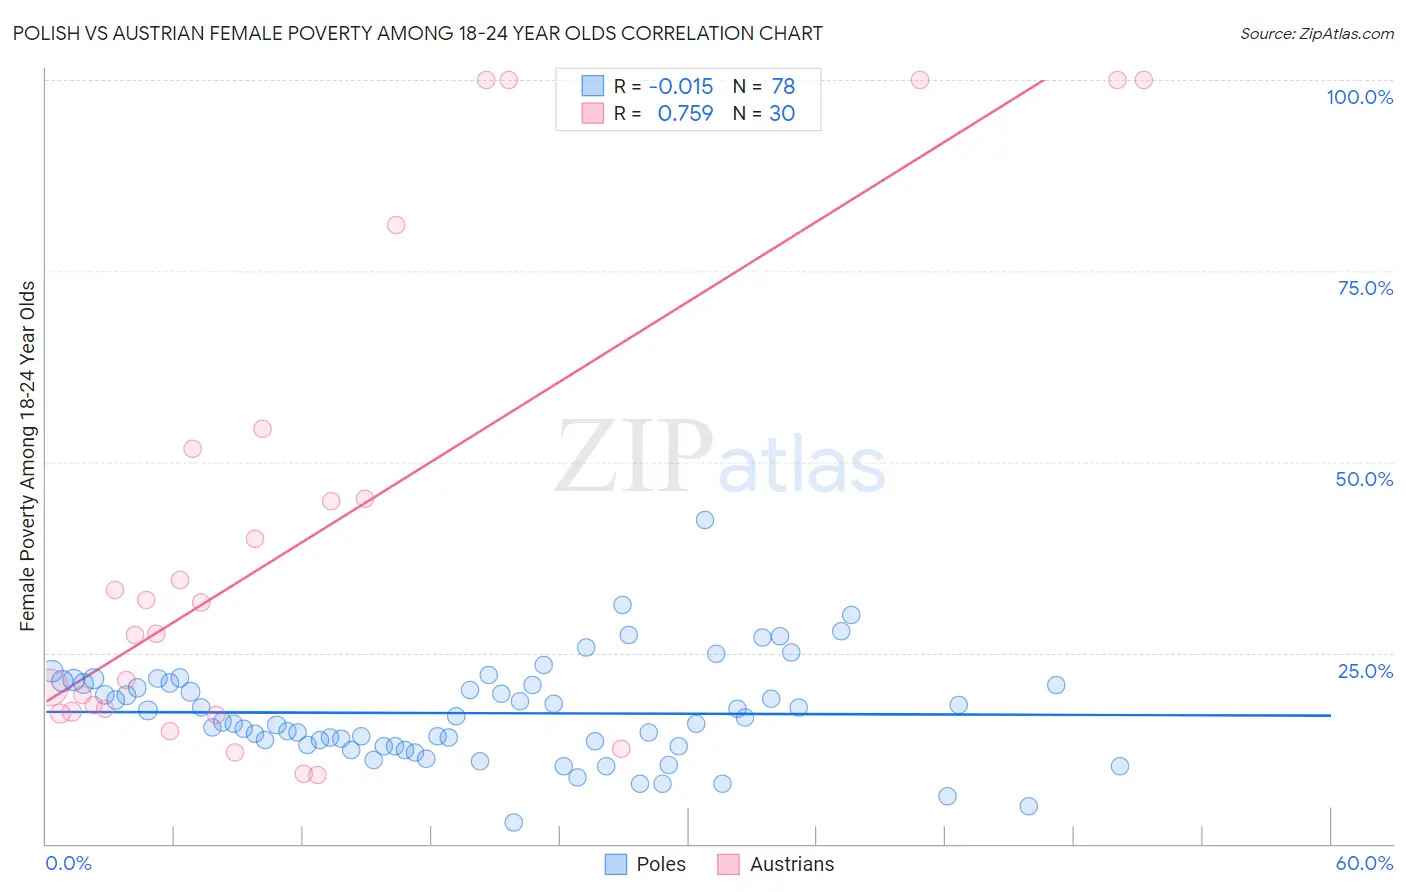 Polish vs Austrian Female Poverty Among 18-24 Year Olds